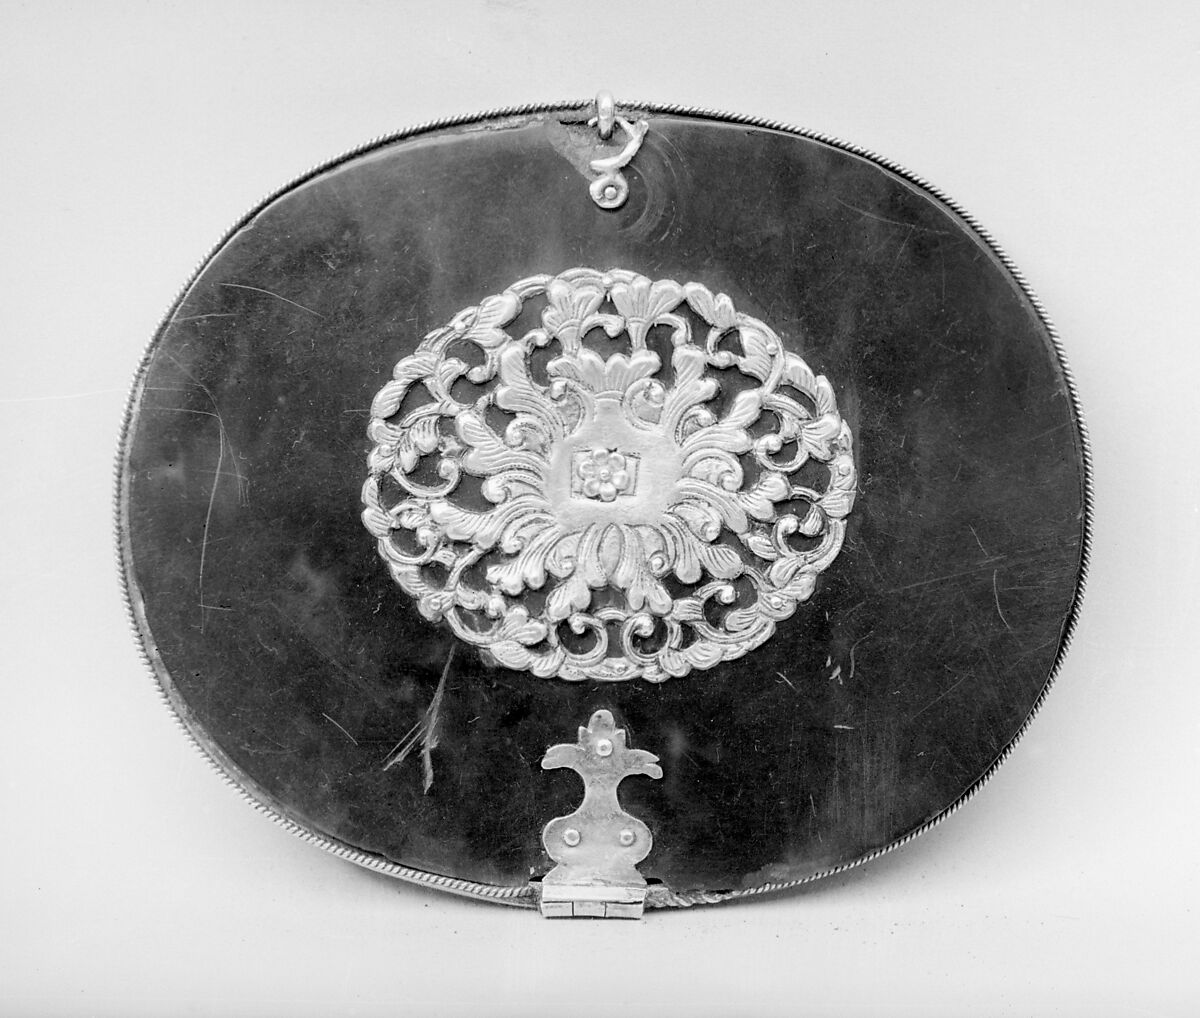 Box, Tortoiseshell, silver, possibly French 